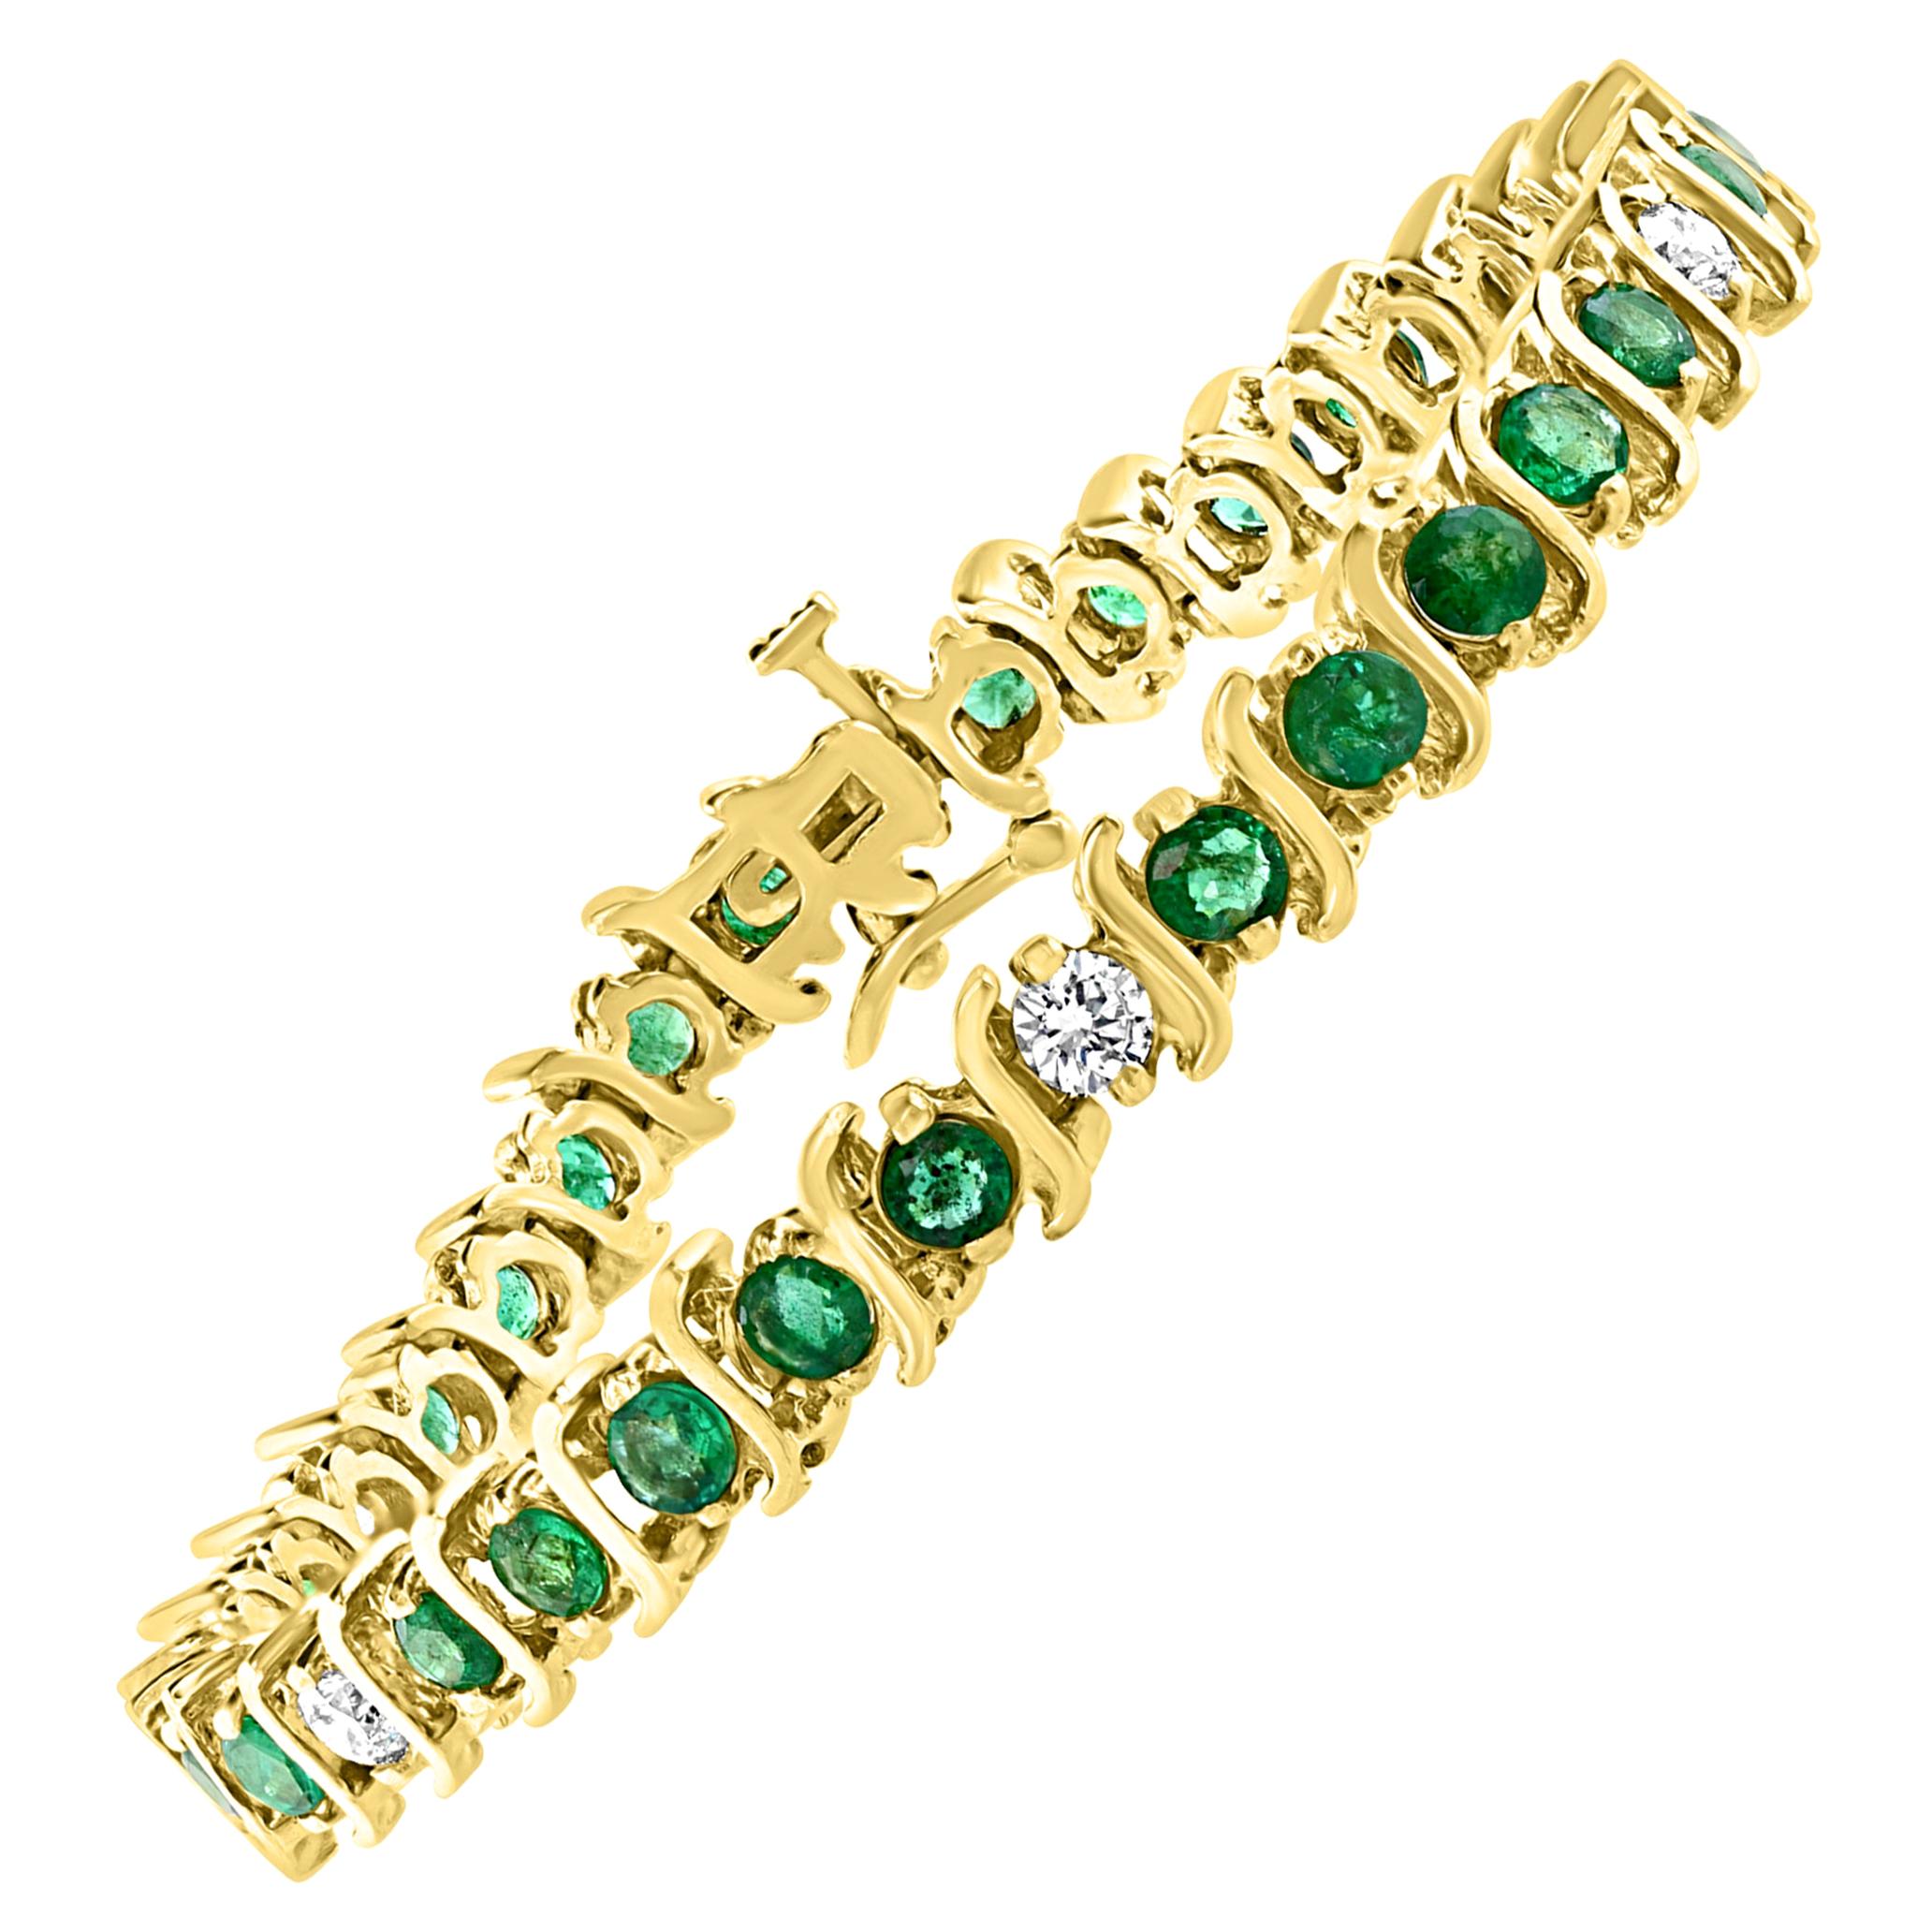 6 Carat Emerald & 1.5 Carat Diamond Tennis Bracelet 14 Karat Yellow Gold S-Shape